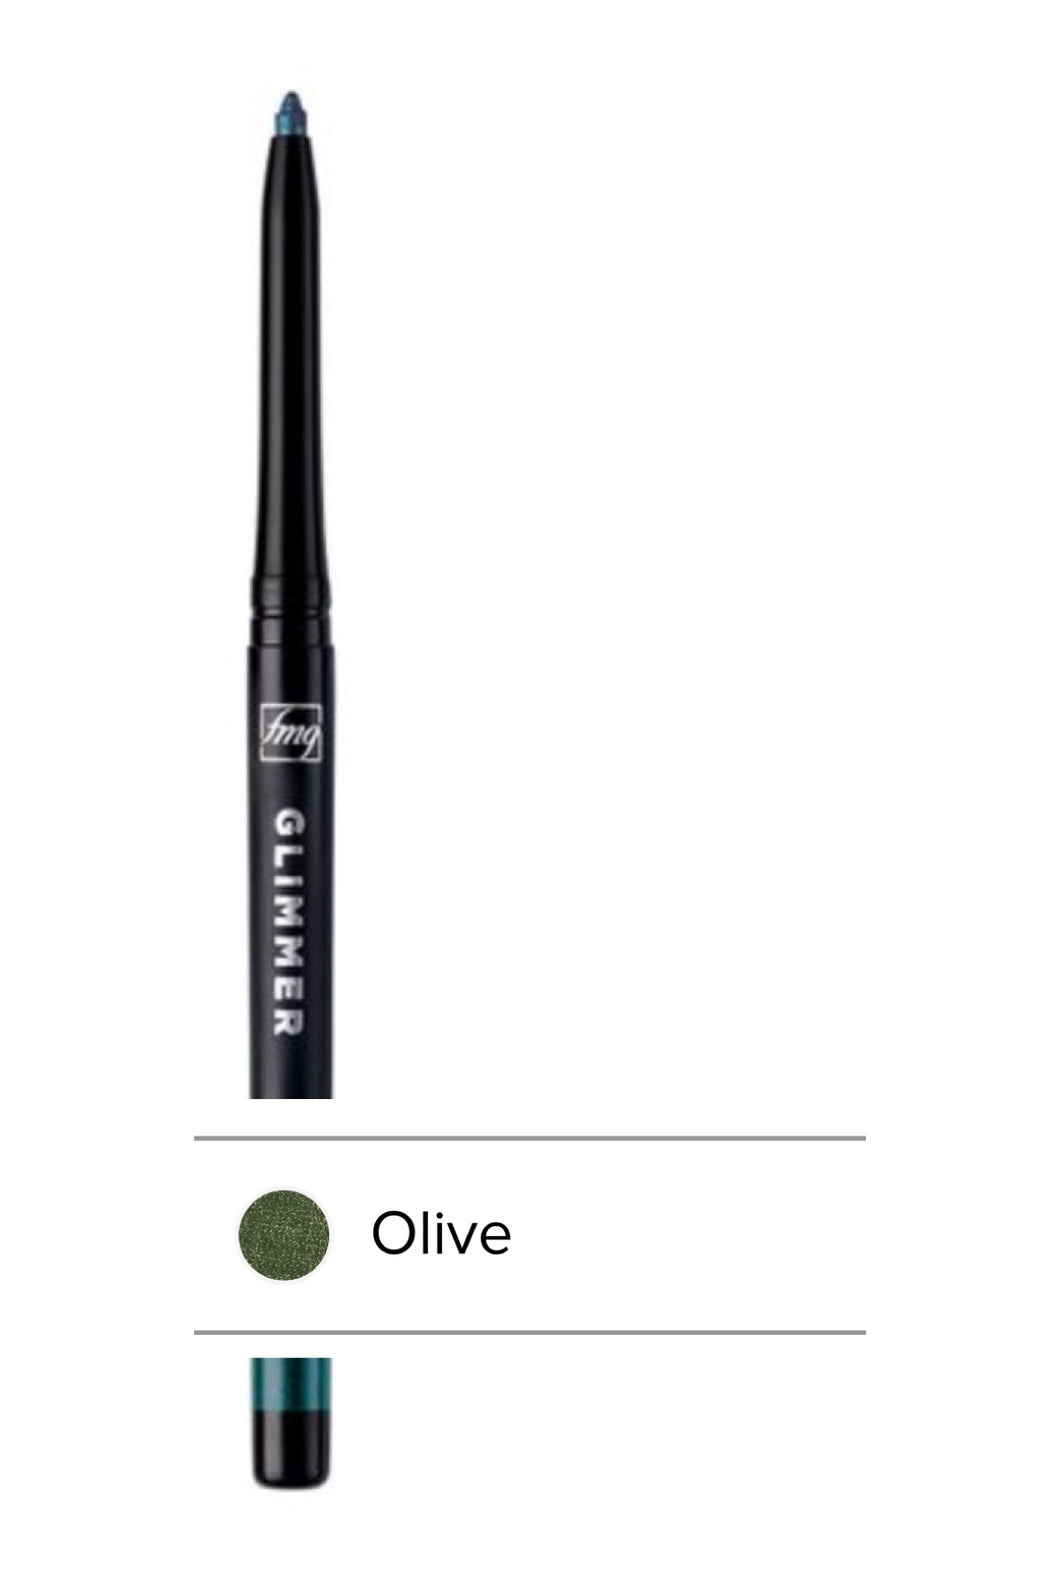 Olive fmg Glimmerstick Diamond Eyeliner  USA